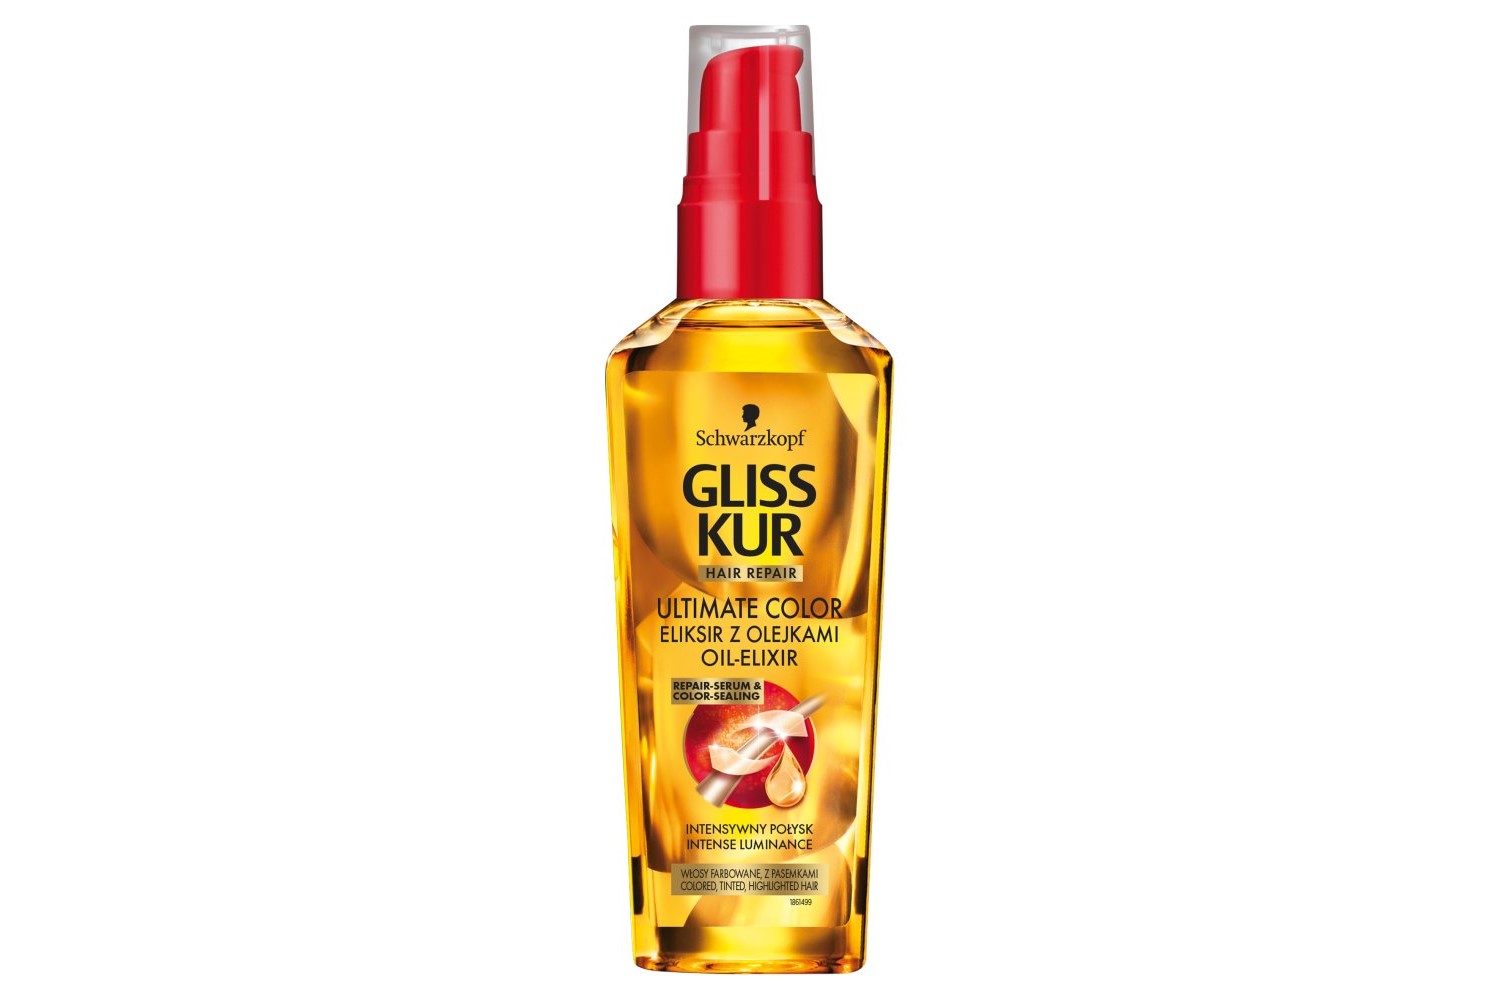 gliss-kur-ultimate-color-oil-elixir